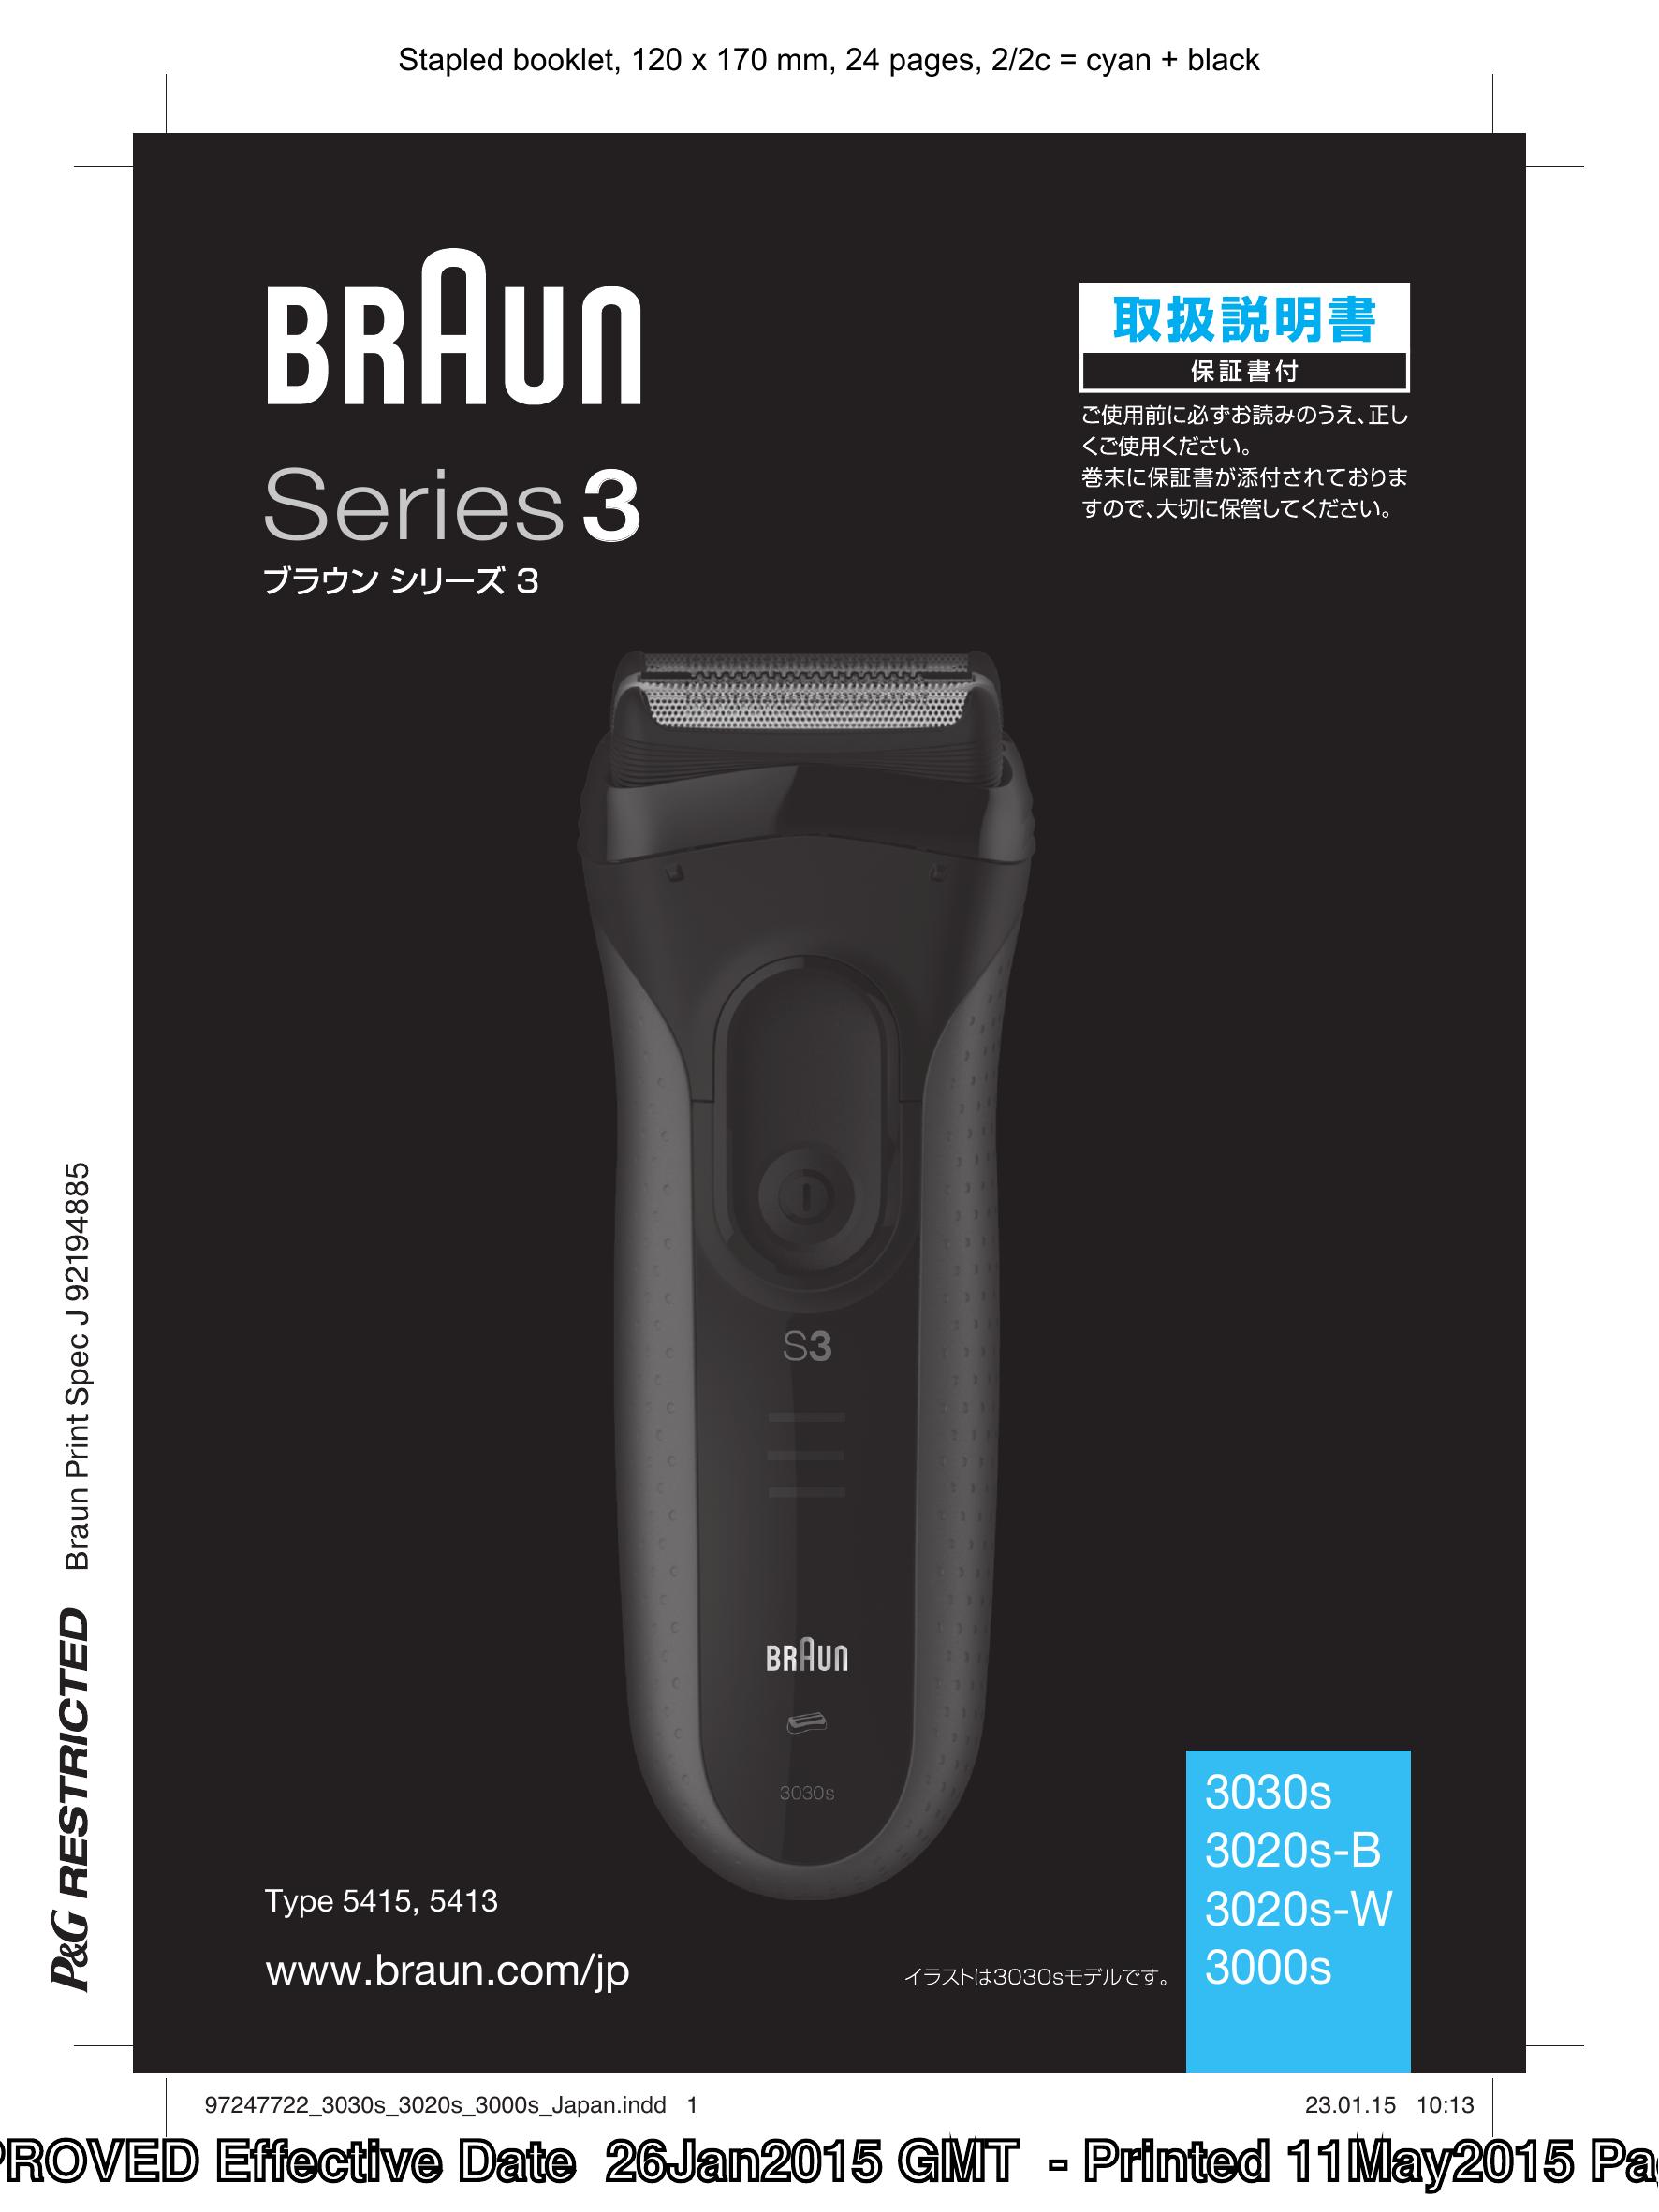 Braun 3020s-W Electric Shaver User Manual